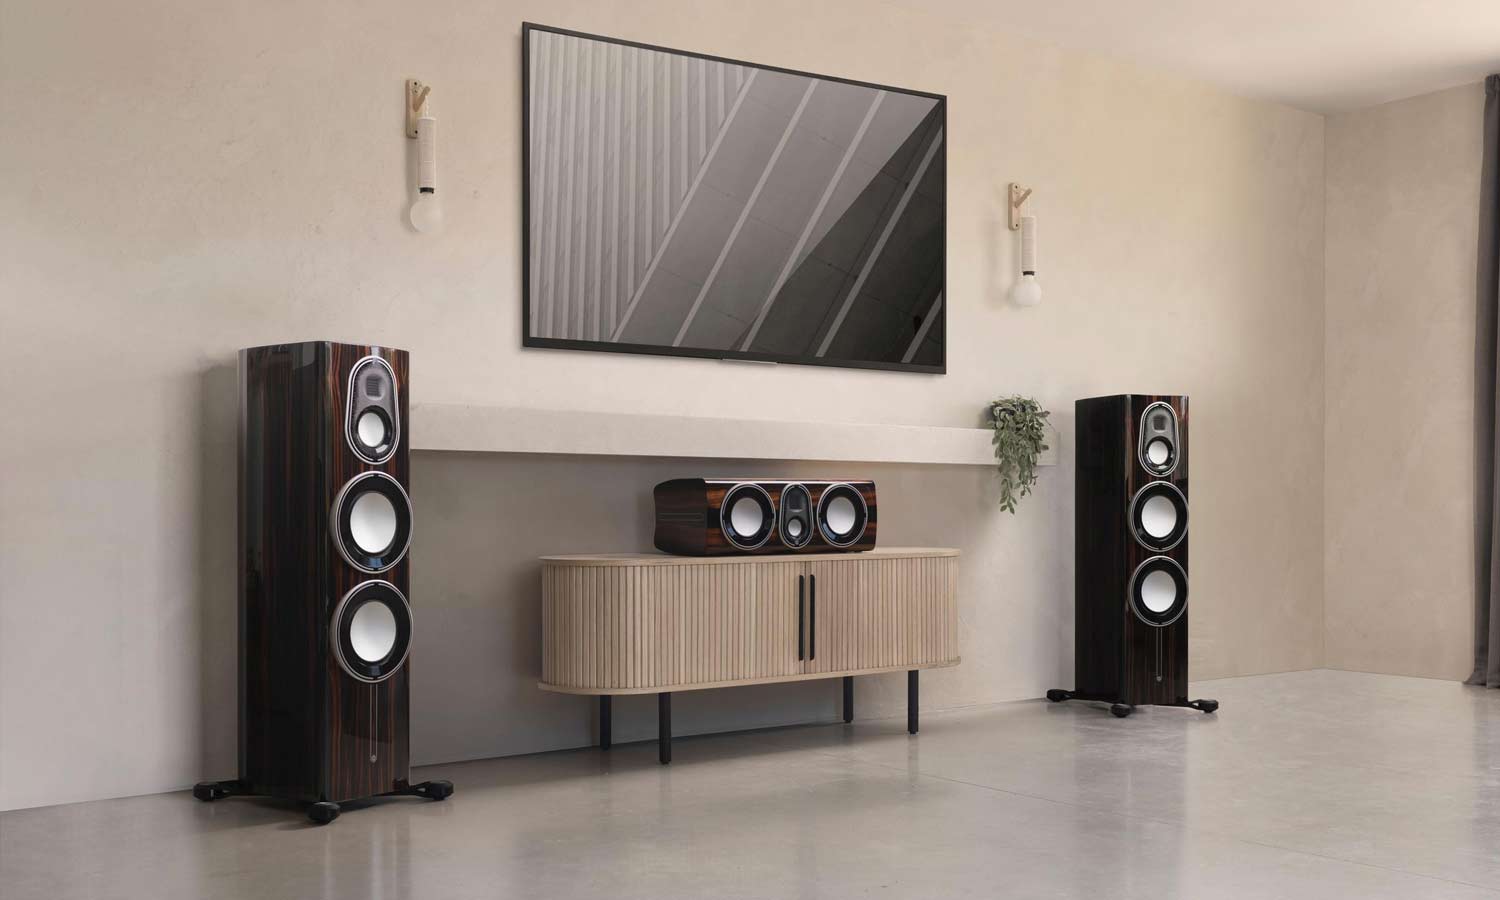 Monitor Audio Platinum 300 3G Floorstanding Speaker